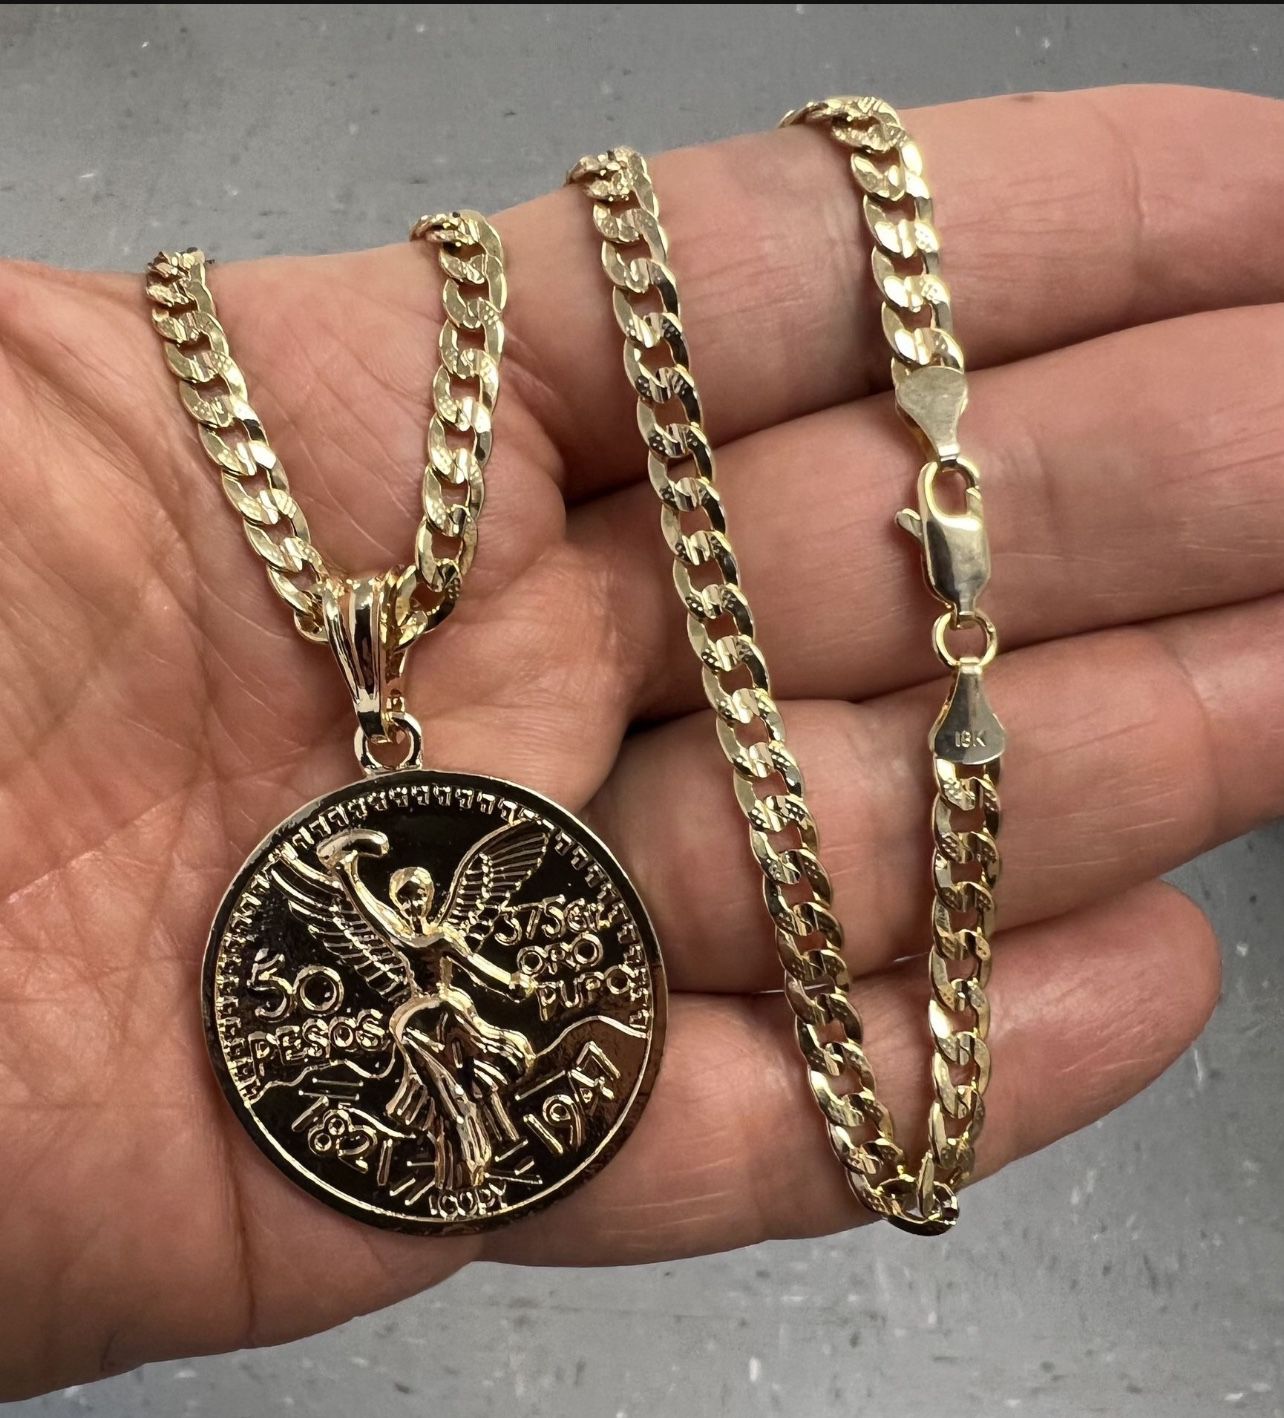 14k premium gold plated Saint Michael pendant and necklace